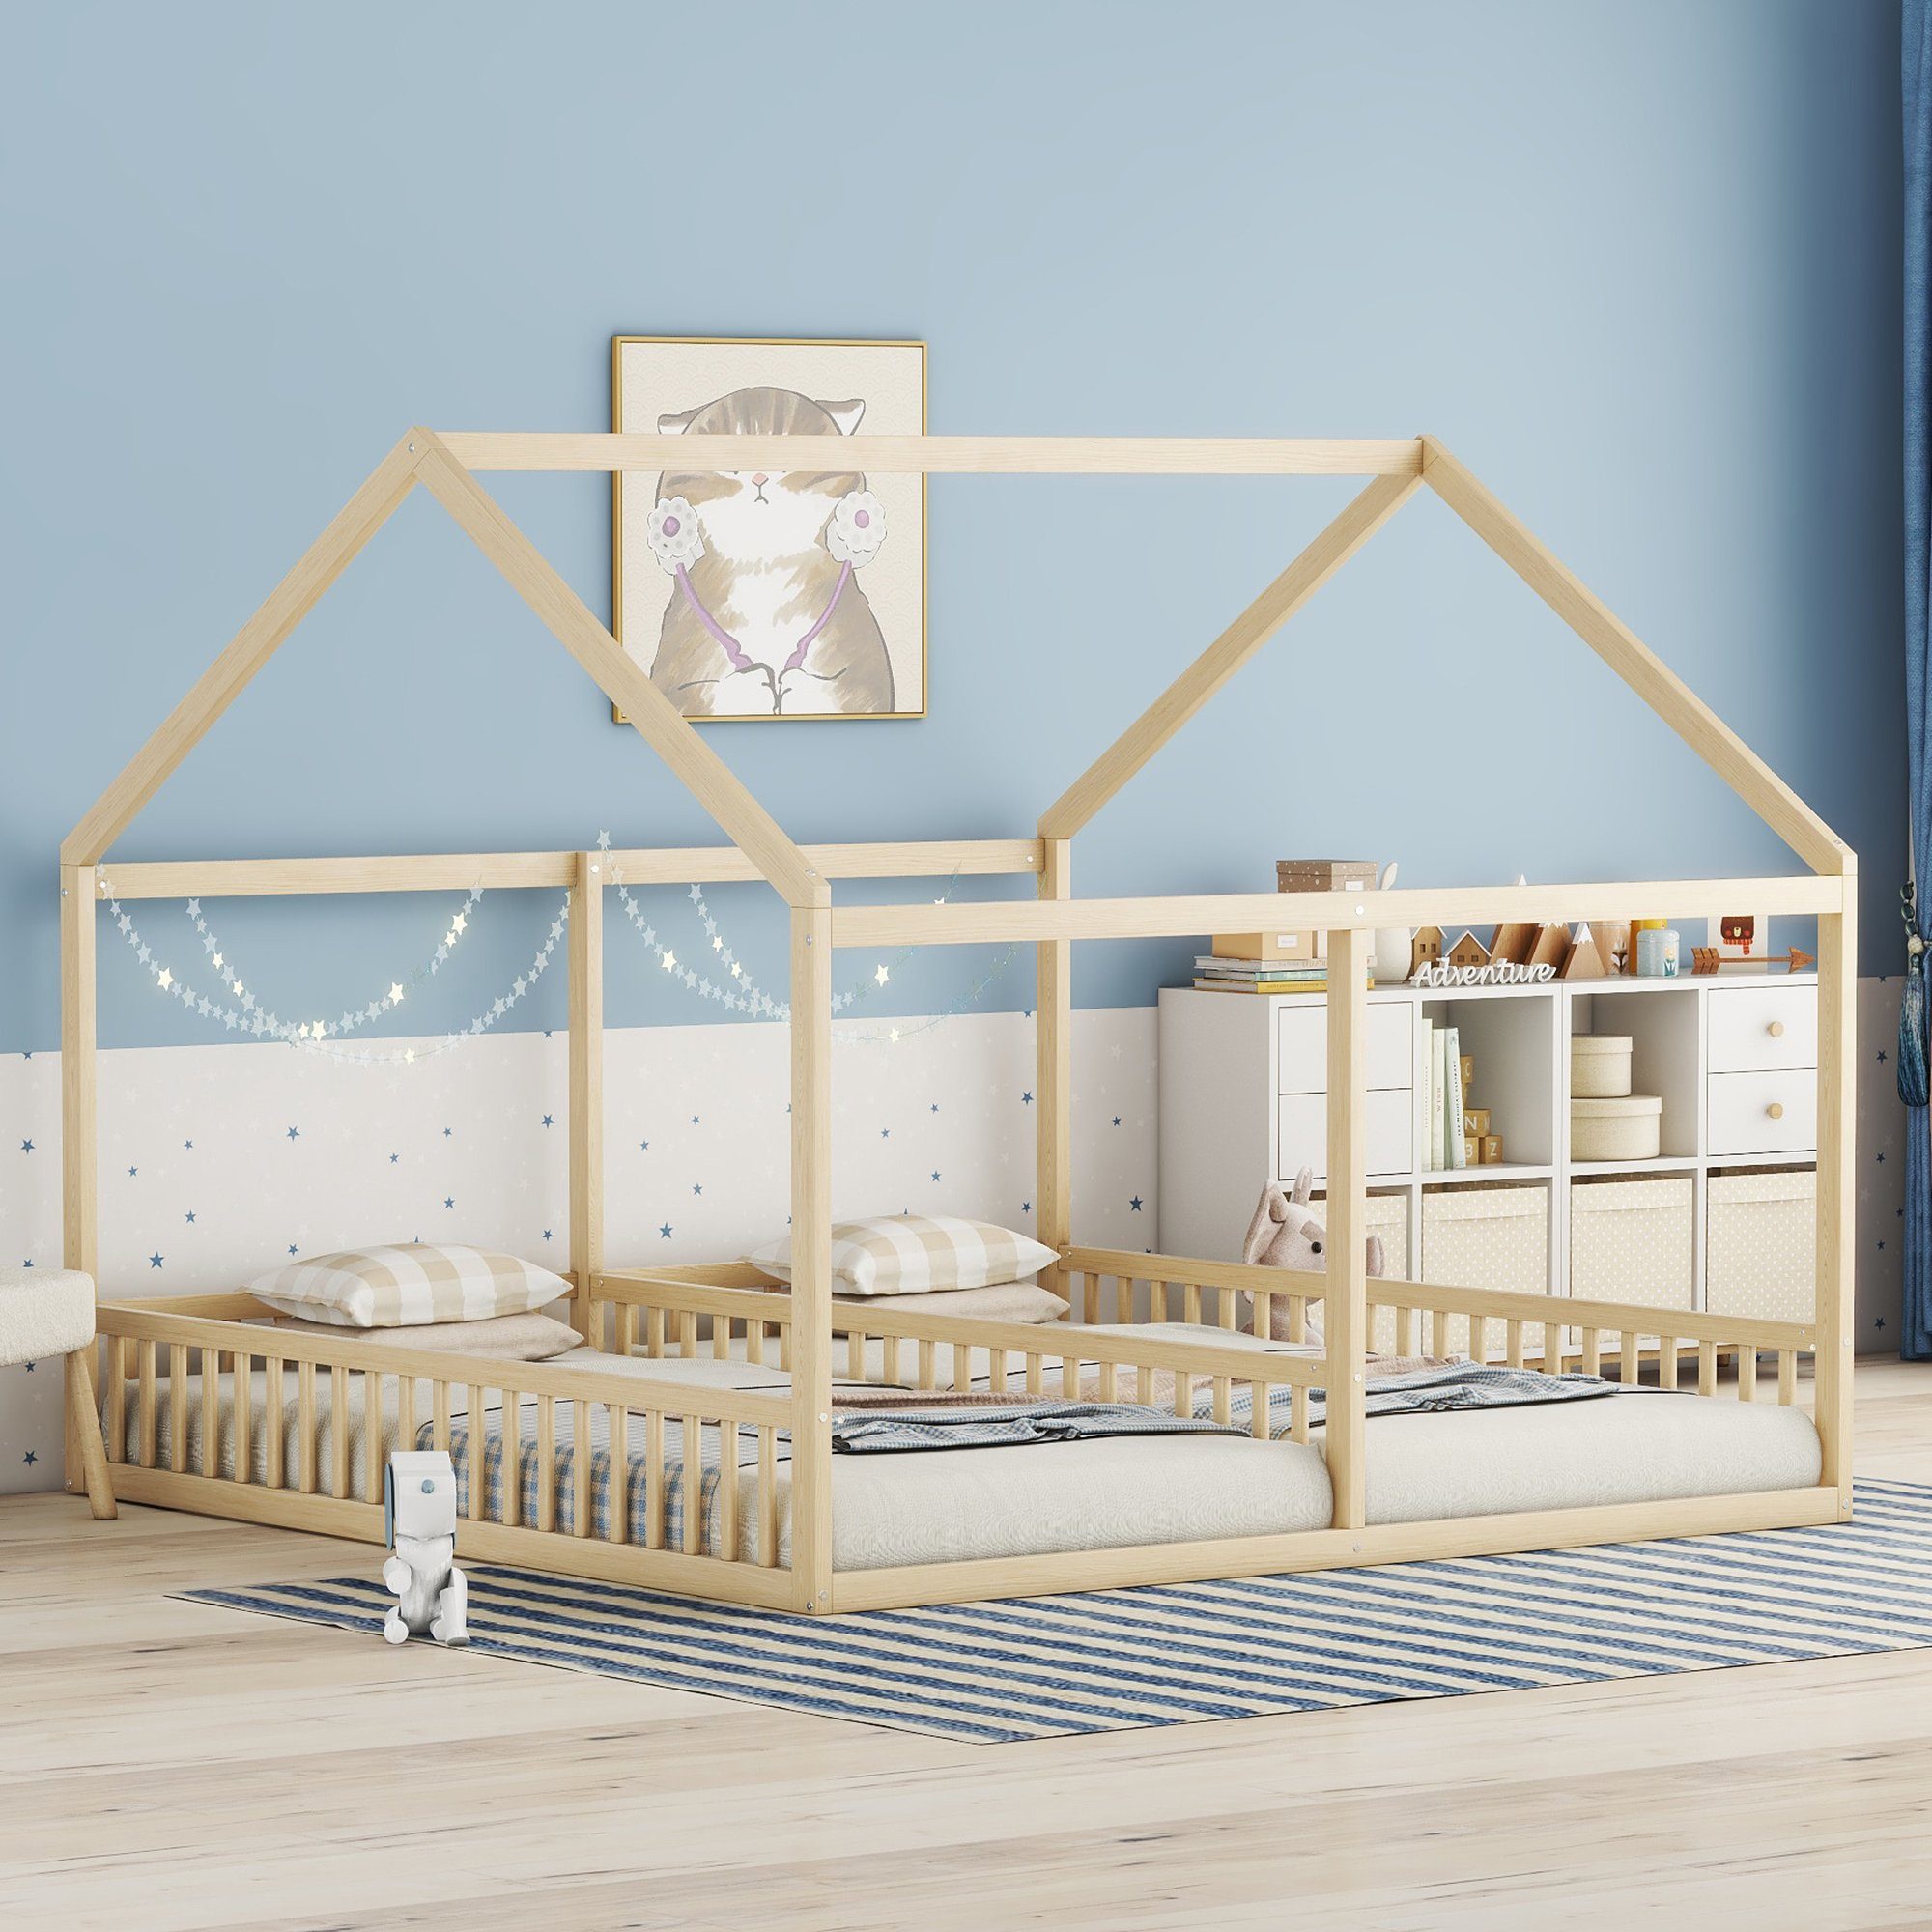 Einzelbetten, (flache Funktionsbett WISHDOR Hausmodelle, Holzbett Betten, ohne Matratze 2-in-1-Betten), 2-in-1-Betten Natur Kinderbett